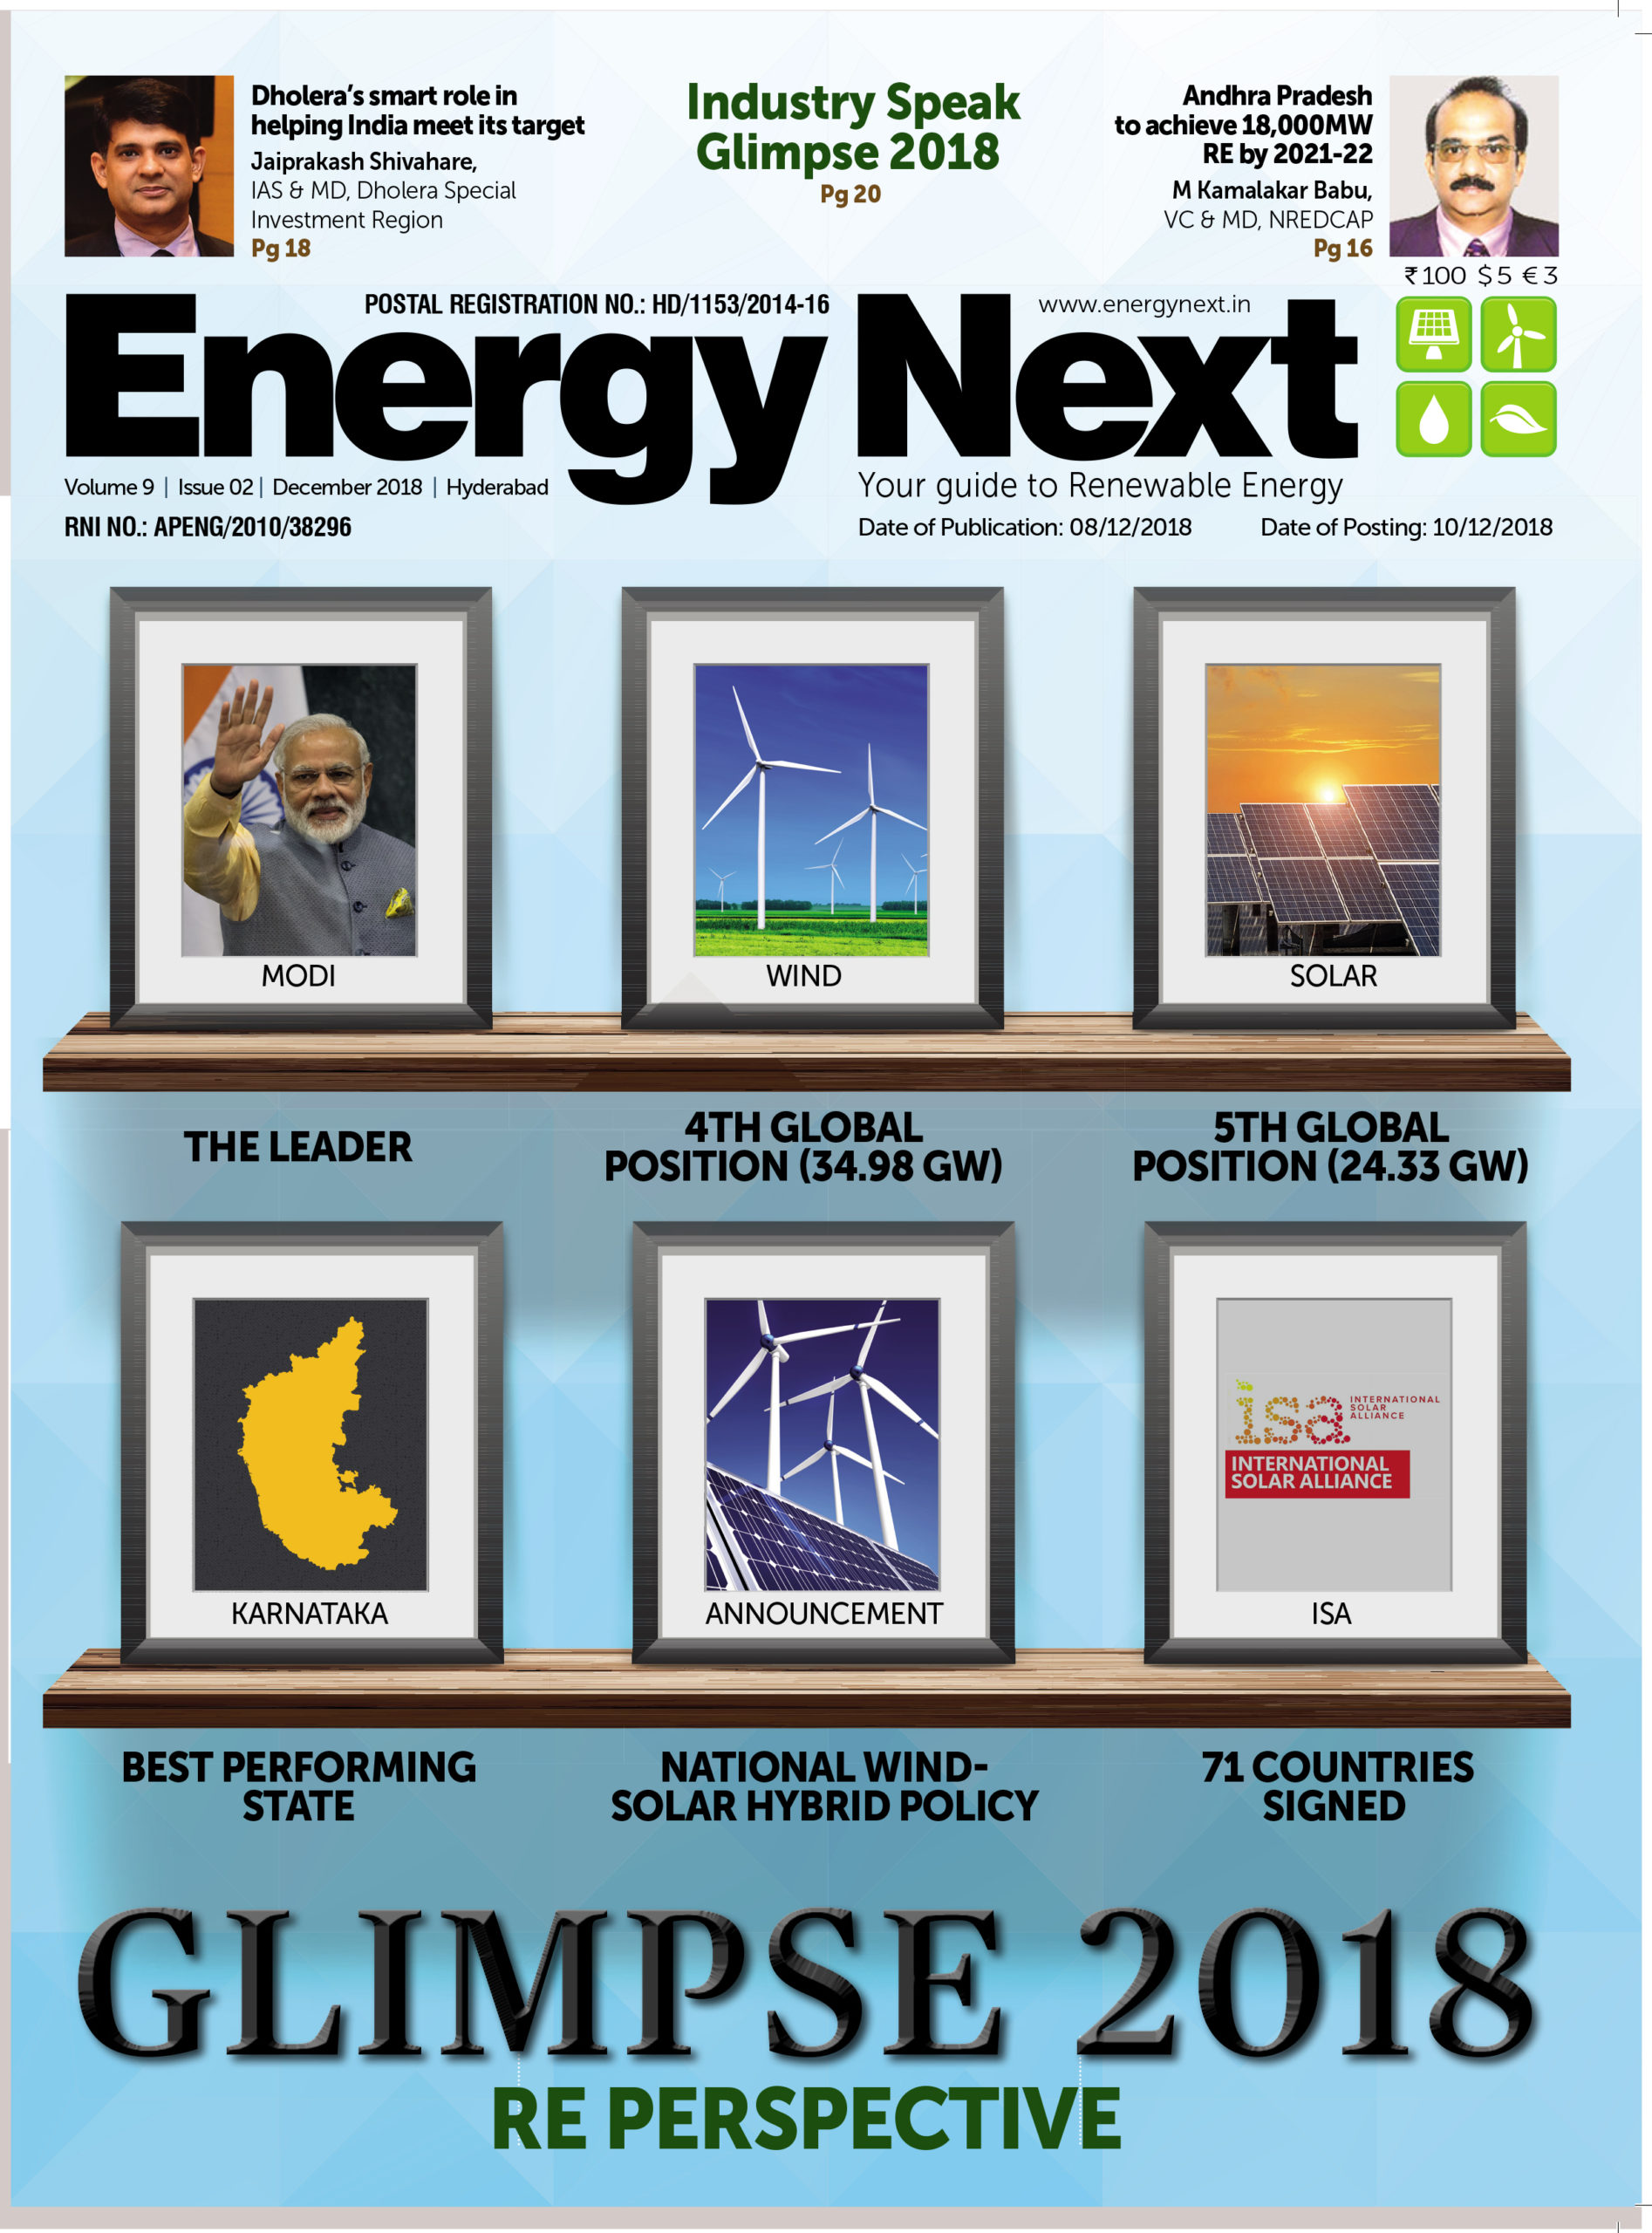 EnergyNext volume 9 issue 2 Dec 2018 scaled